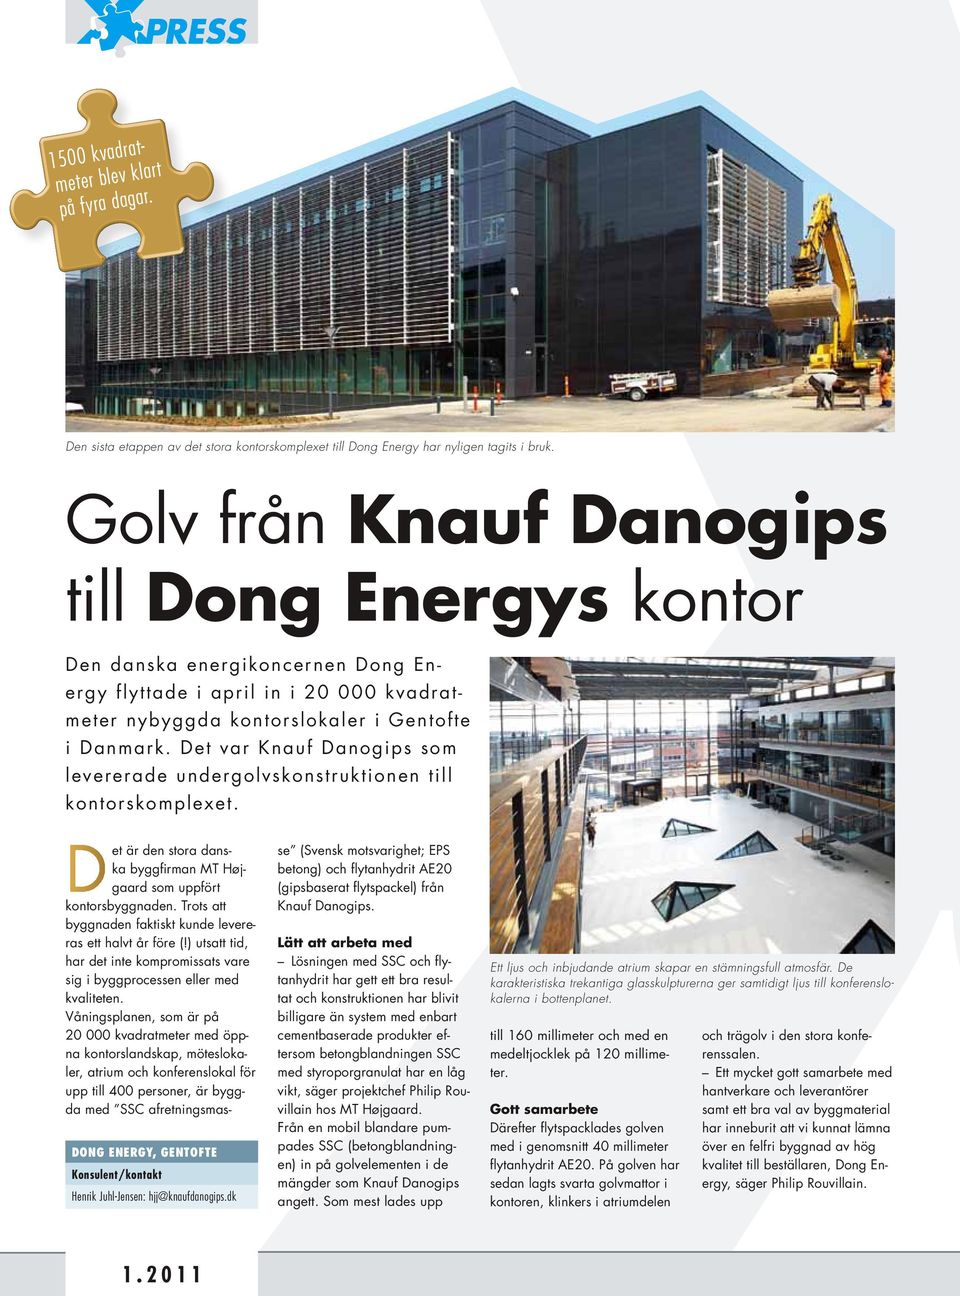 Det var Knauf Danogips som levererade undergolvskonstruktionen till kontorskomplexet. dong energy, Gentofte Konsulent/kontakt Henrik Juhl-Jensen: hjj@knaufdanogips.